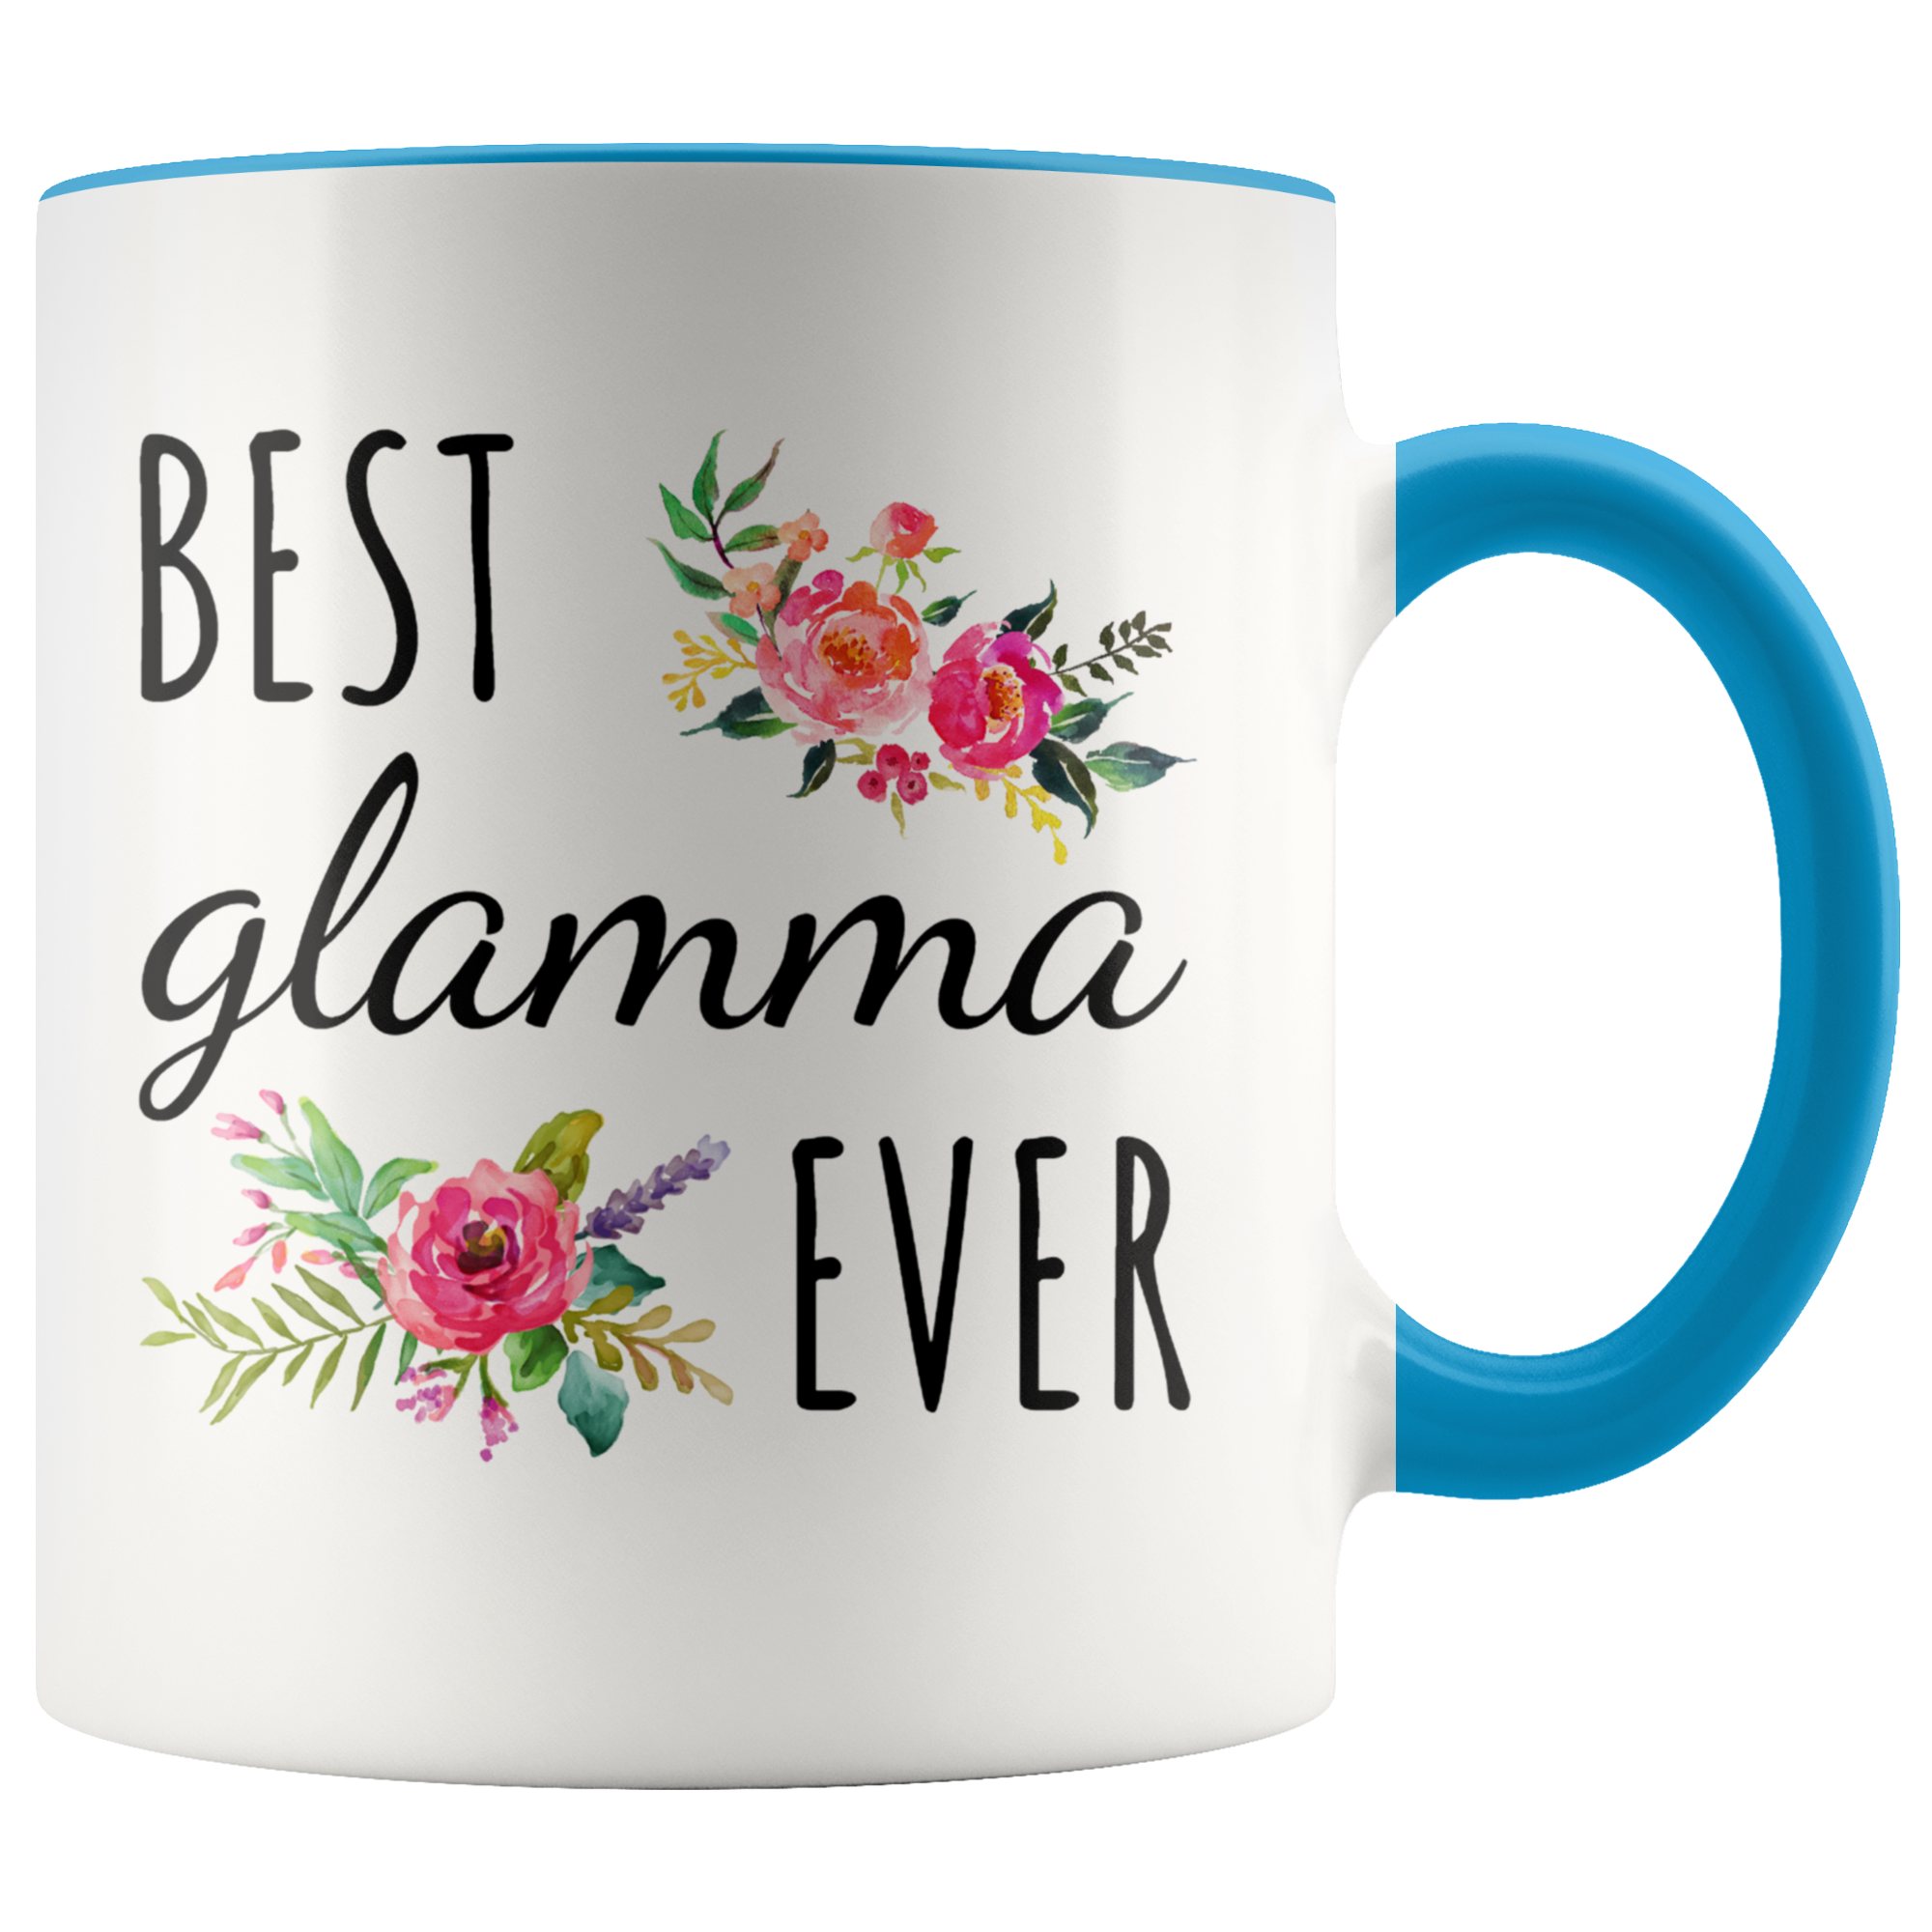 Best Glamma Mug